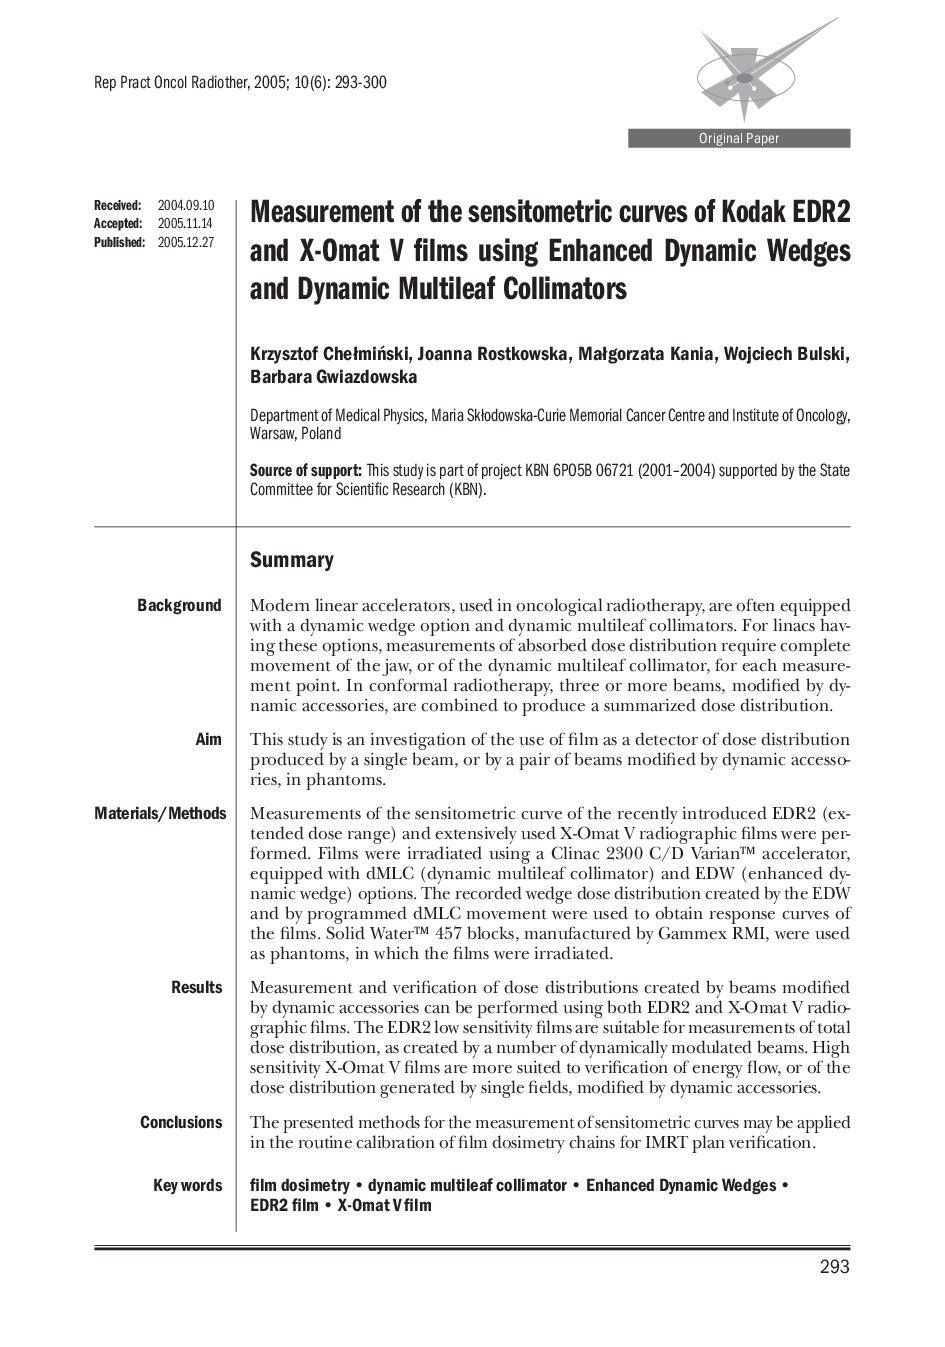 Measurement of the sensitometric curves of Kodak EDR2 and X-Omat V films using Enhanced Dynamic Wedges and Dynamic Multileaf Collimators